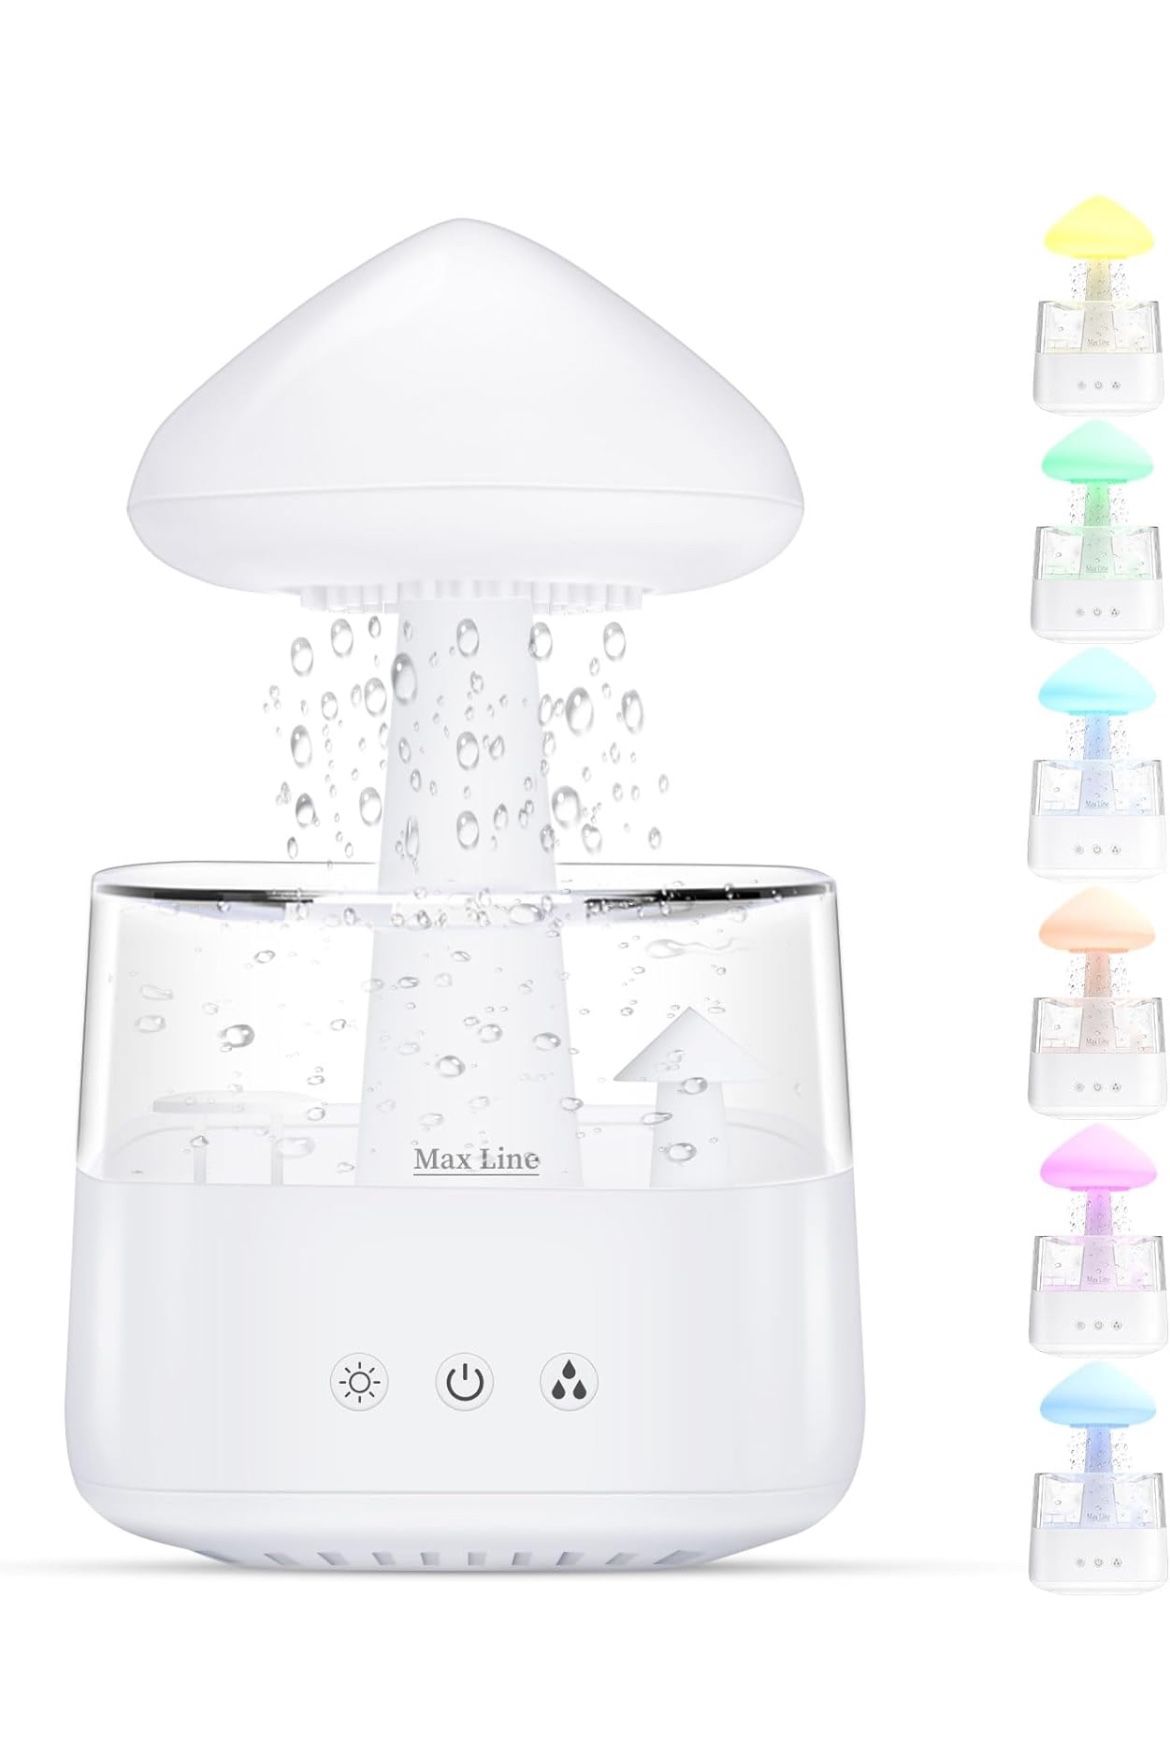 ABBWOBOX Rain Cloud Humidifier Water Drip, Essential Oil Diffuser for Home Bedroom Aroma, Mushroom Humidifier With Calming Rain Sounds to Help Sleepin